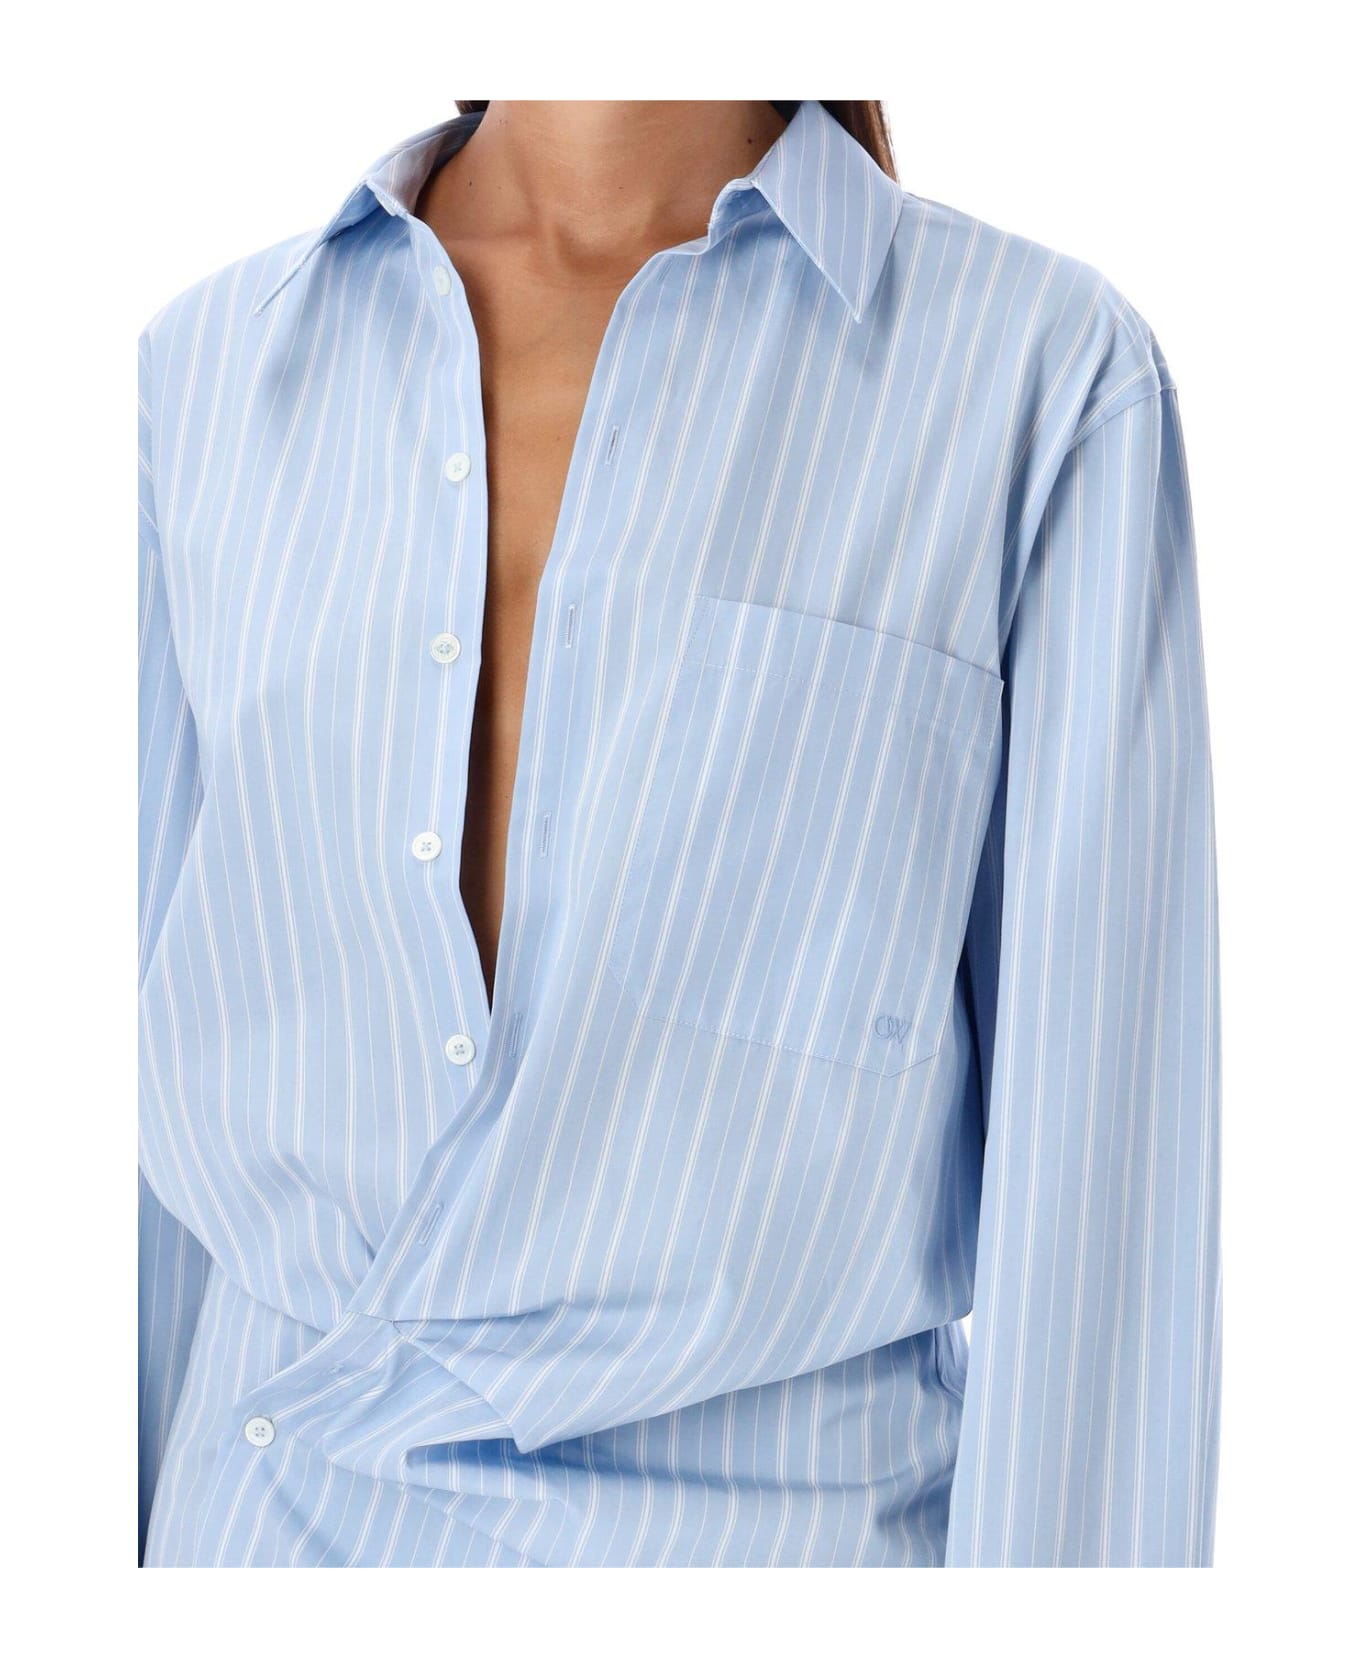 Off-White Stripe Poplin Twist Dress Shirt - Light Blue パジャマ